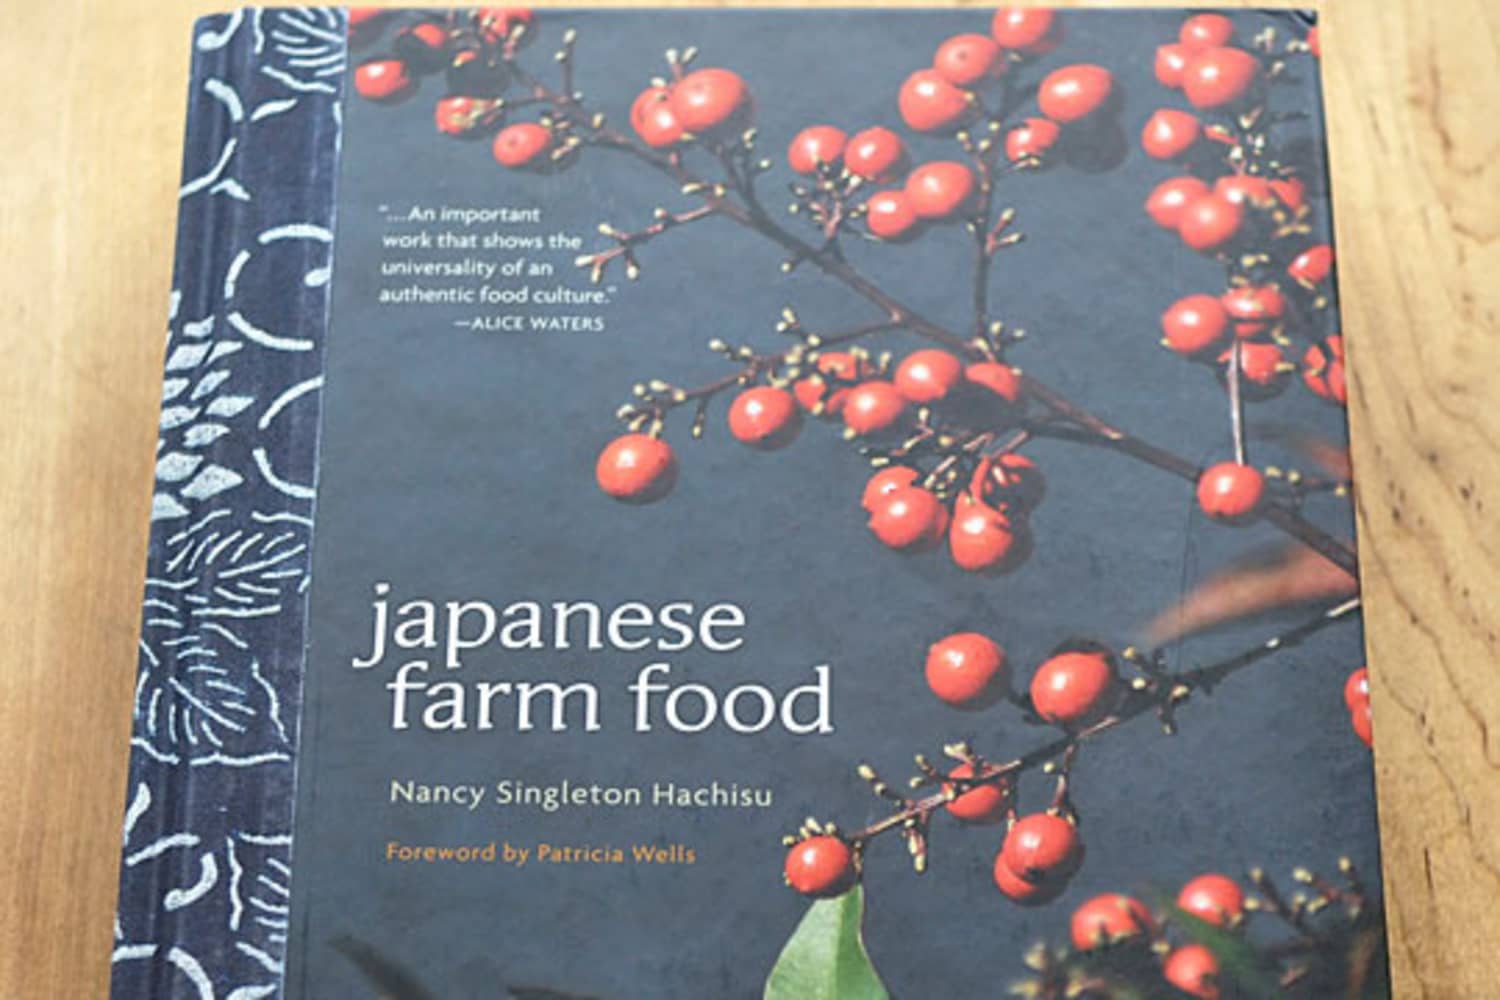 Japanese Farm Food by Nancy Singleton Hachisu | The Kitchn